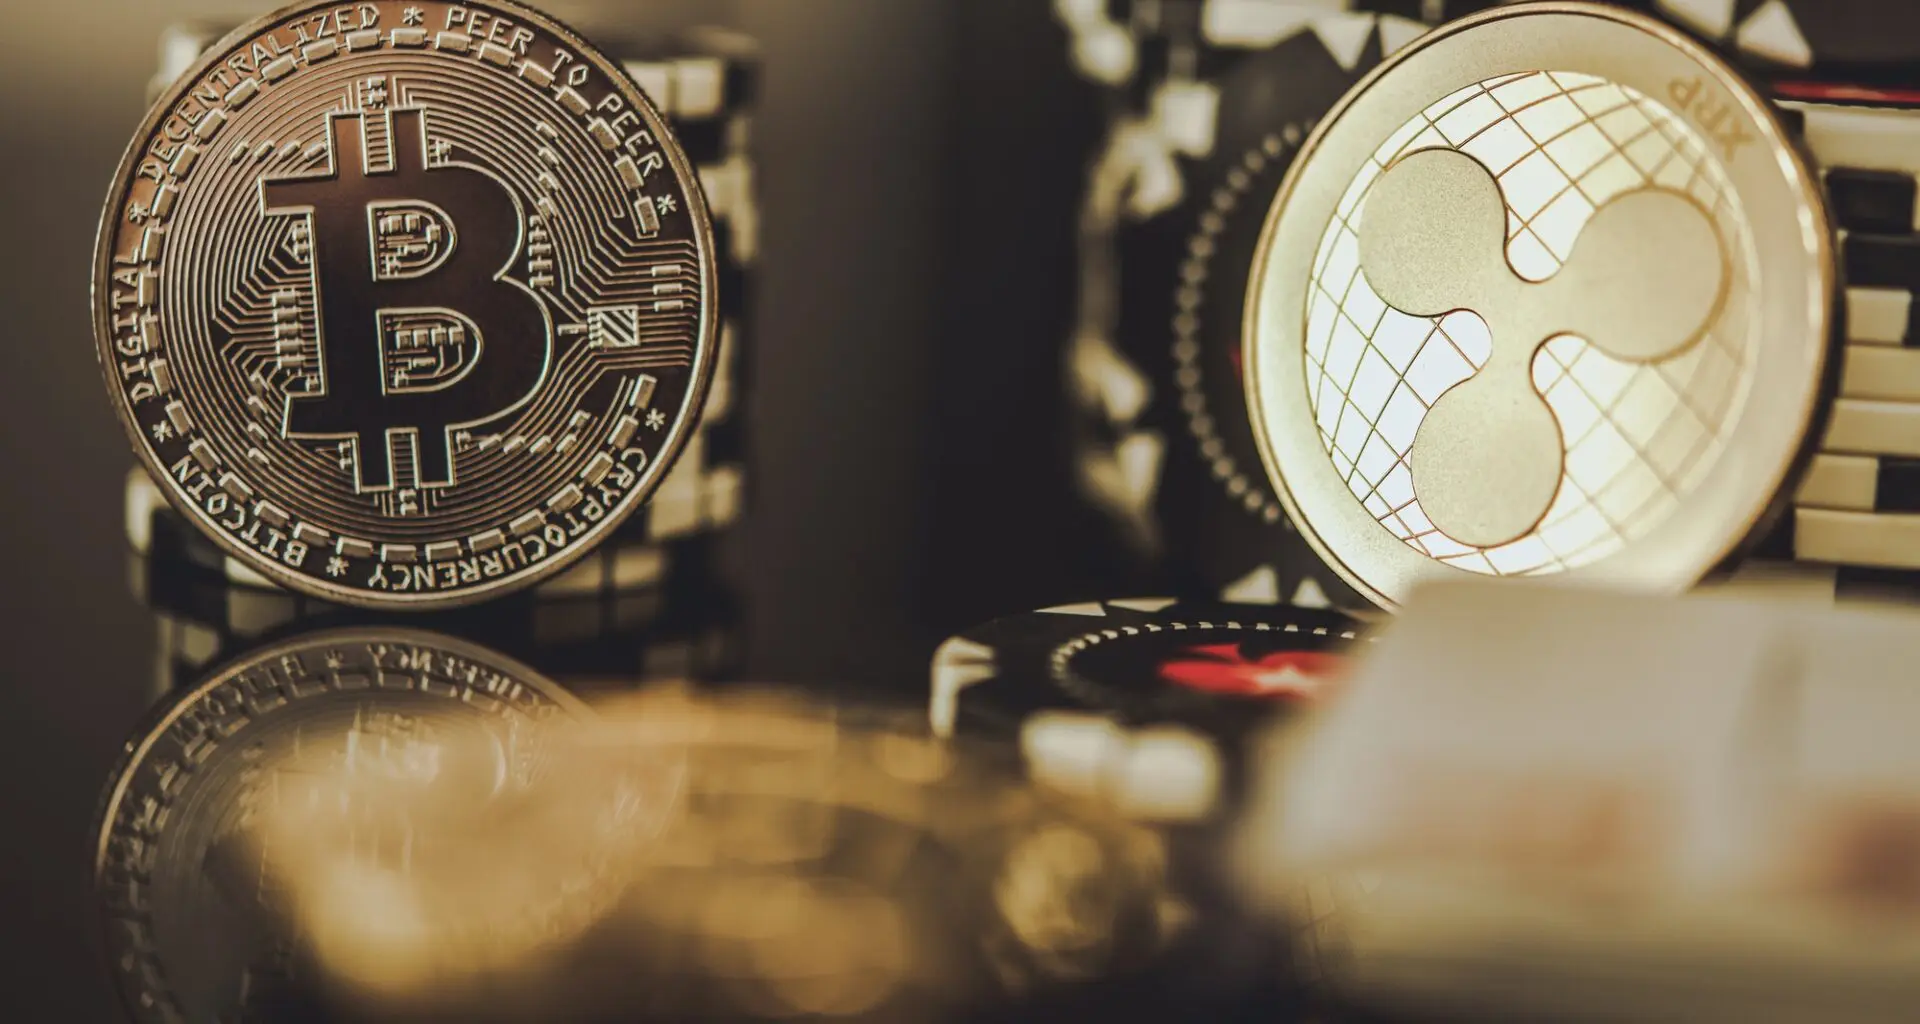 Golden BTC Bitcoin and XRP Ripple Coins